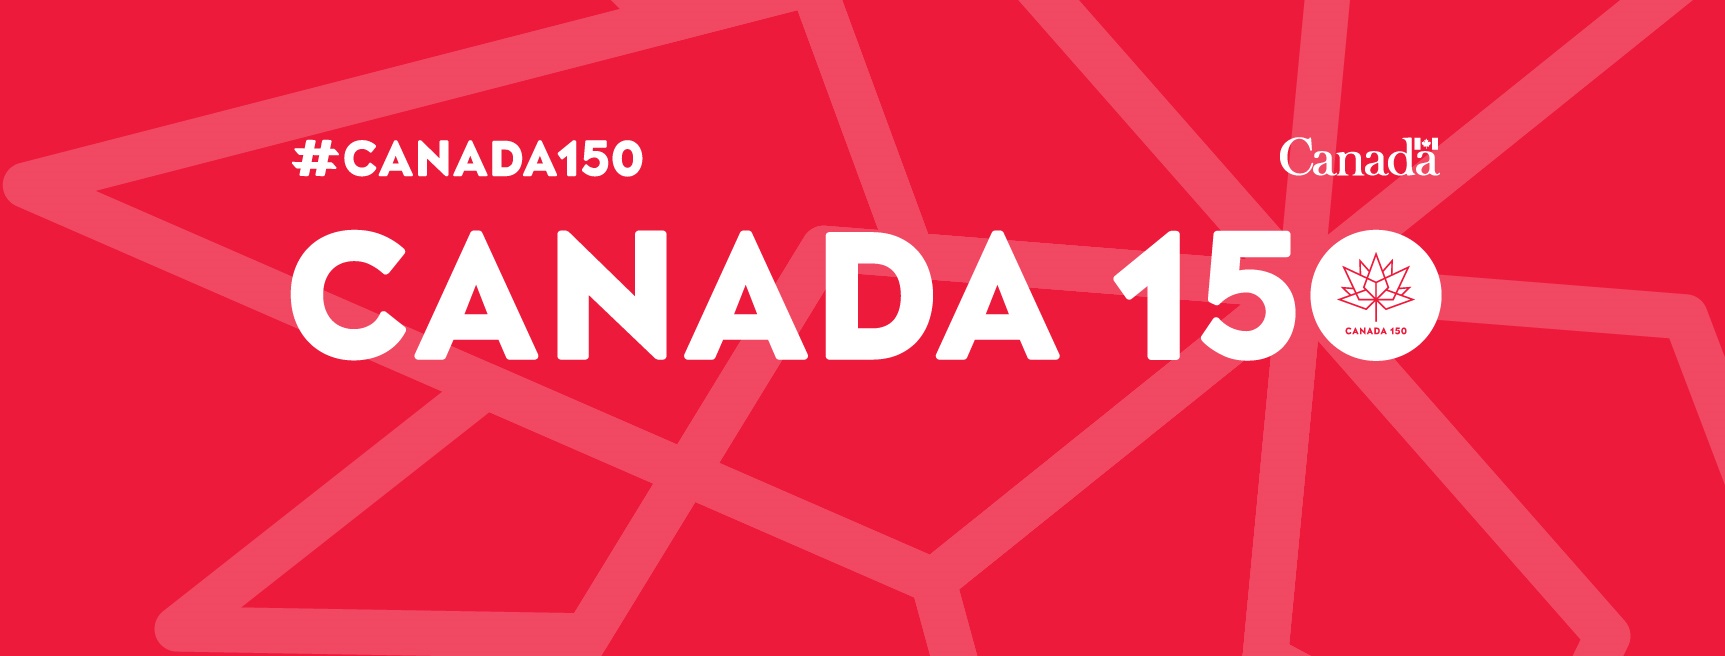 Canada celebrates 150 years of Confederation